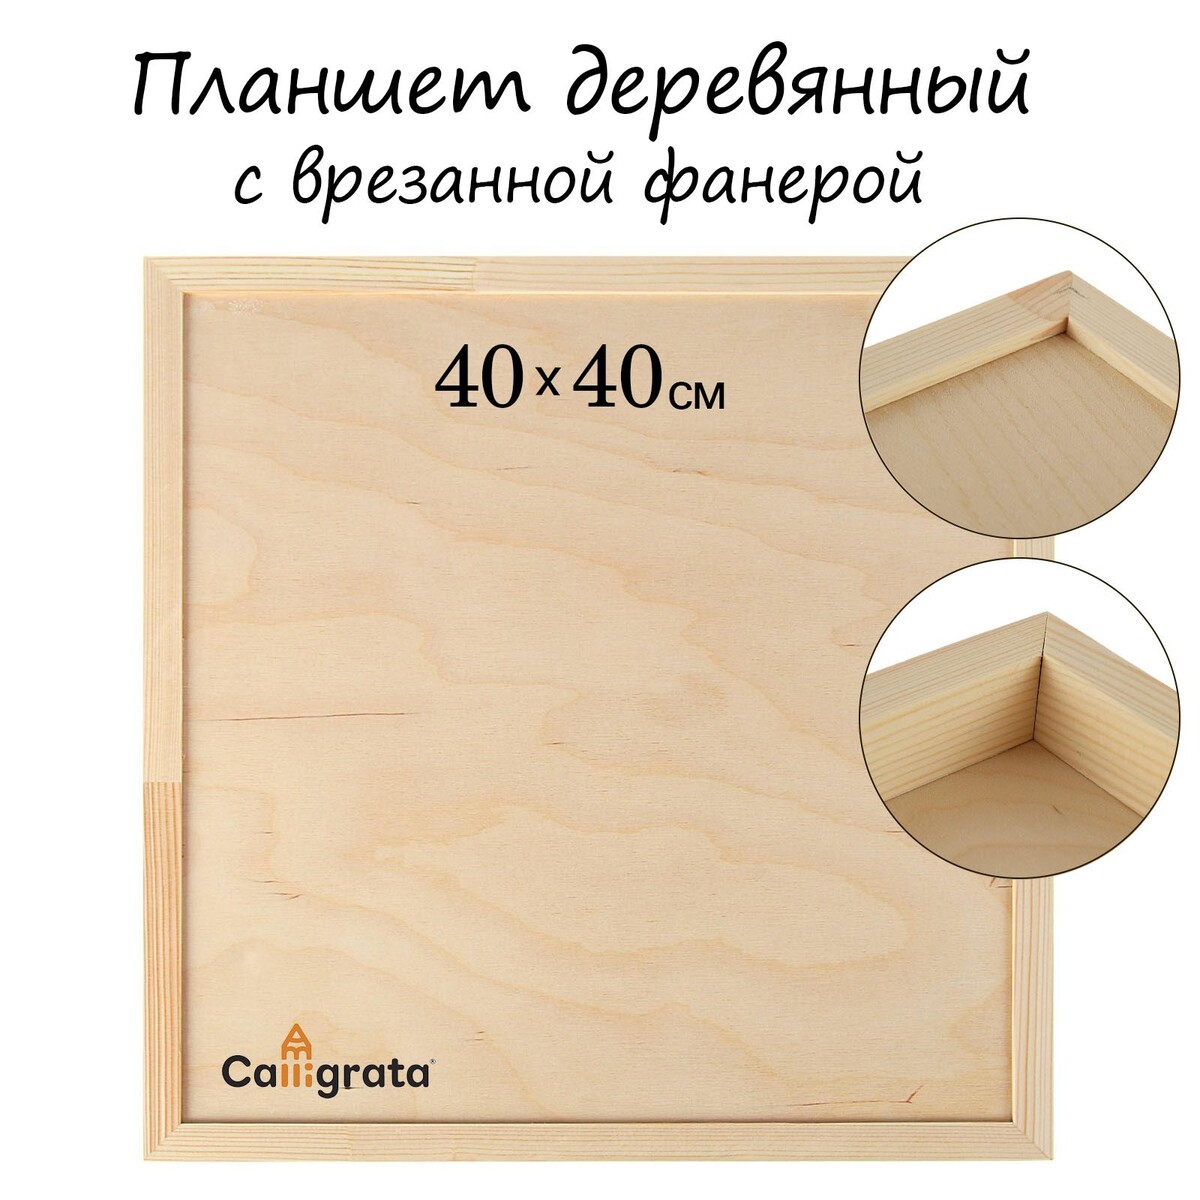 Планшет деревянный, с врезанной фанерой, 40 х 40 х 3,5 см, глубина 0.5 см, сосна планшет деревянный 30 х 40 х 2 см двп